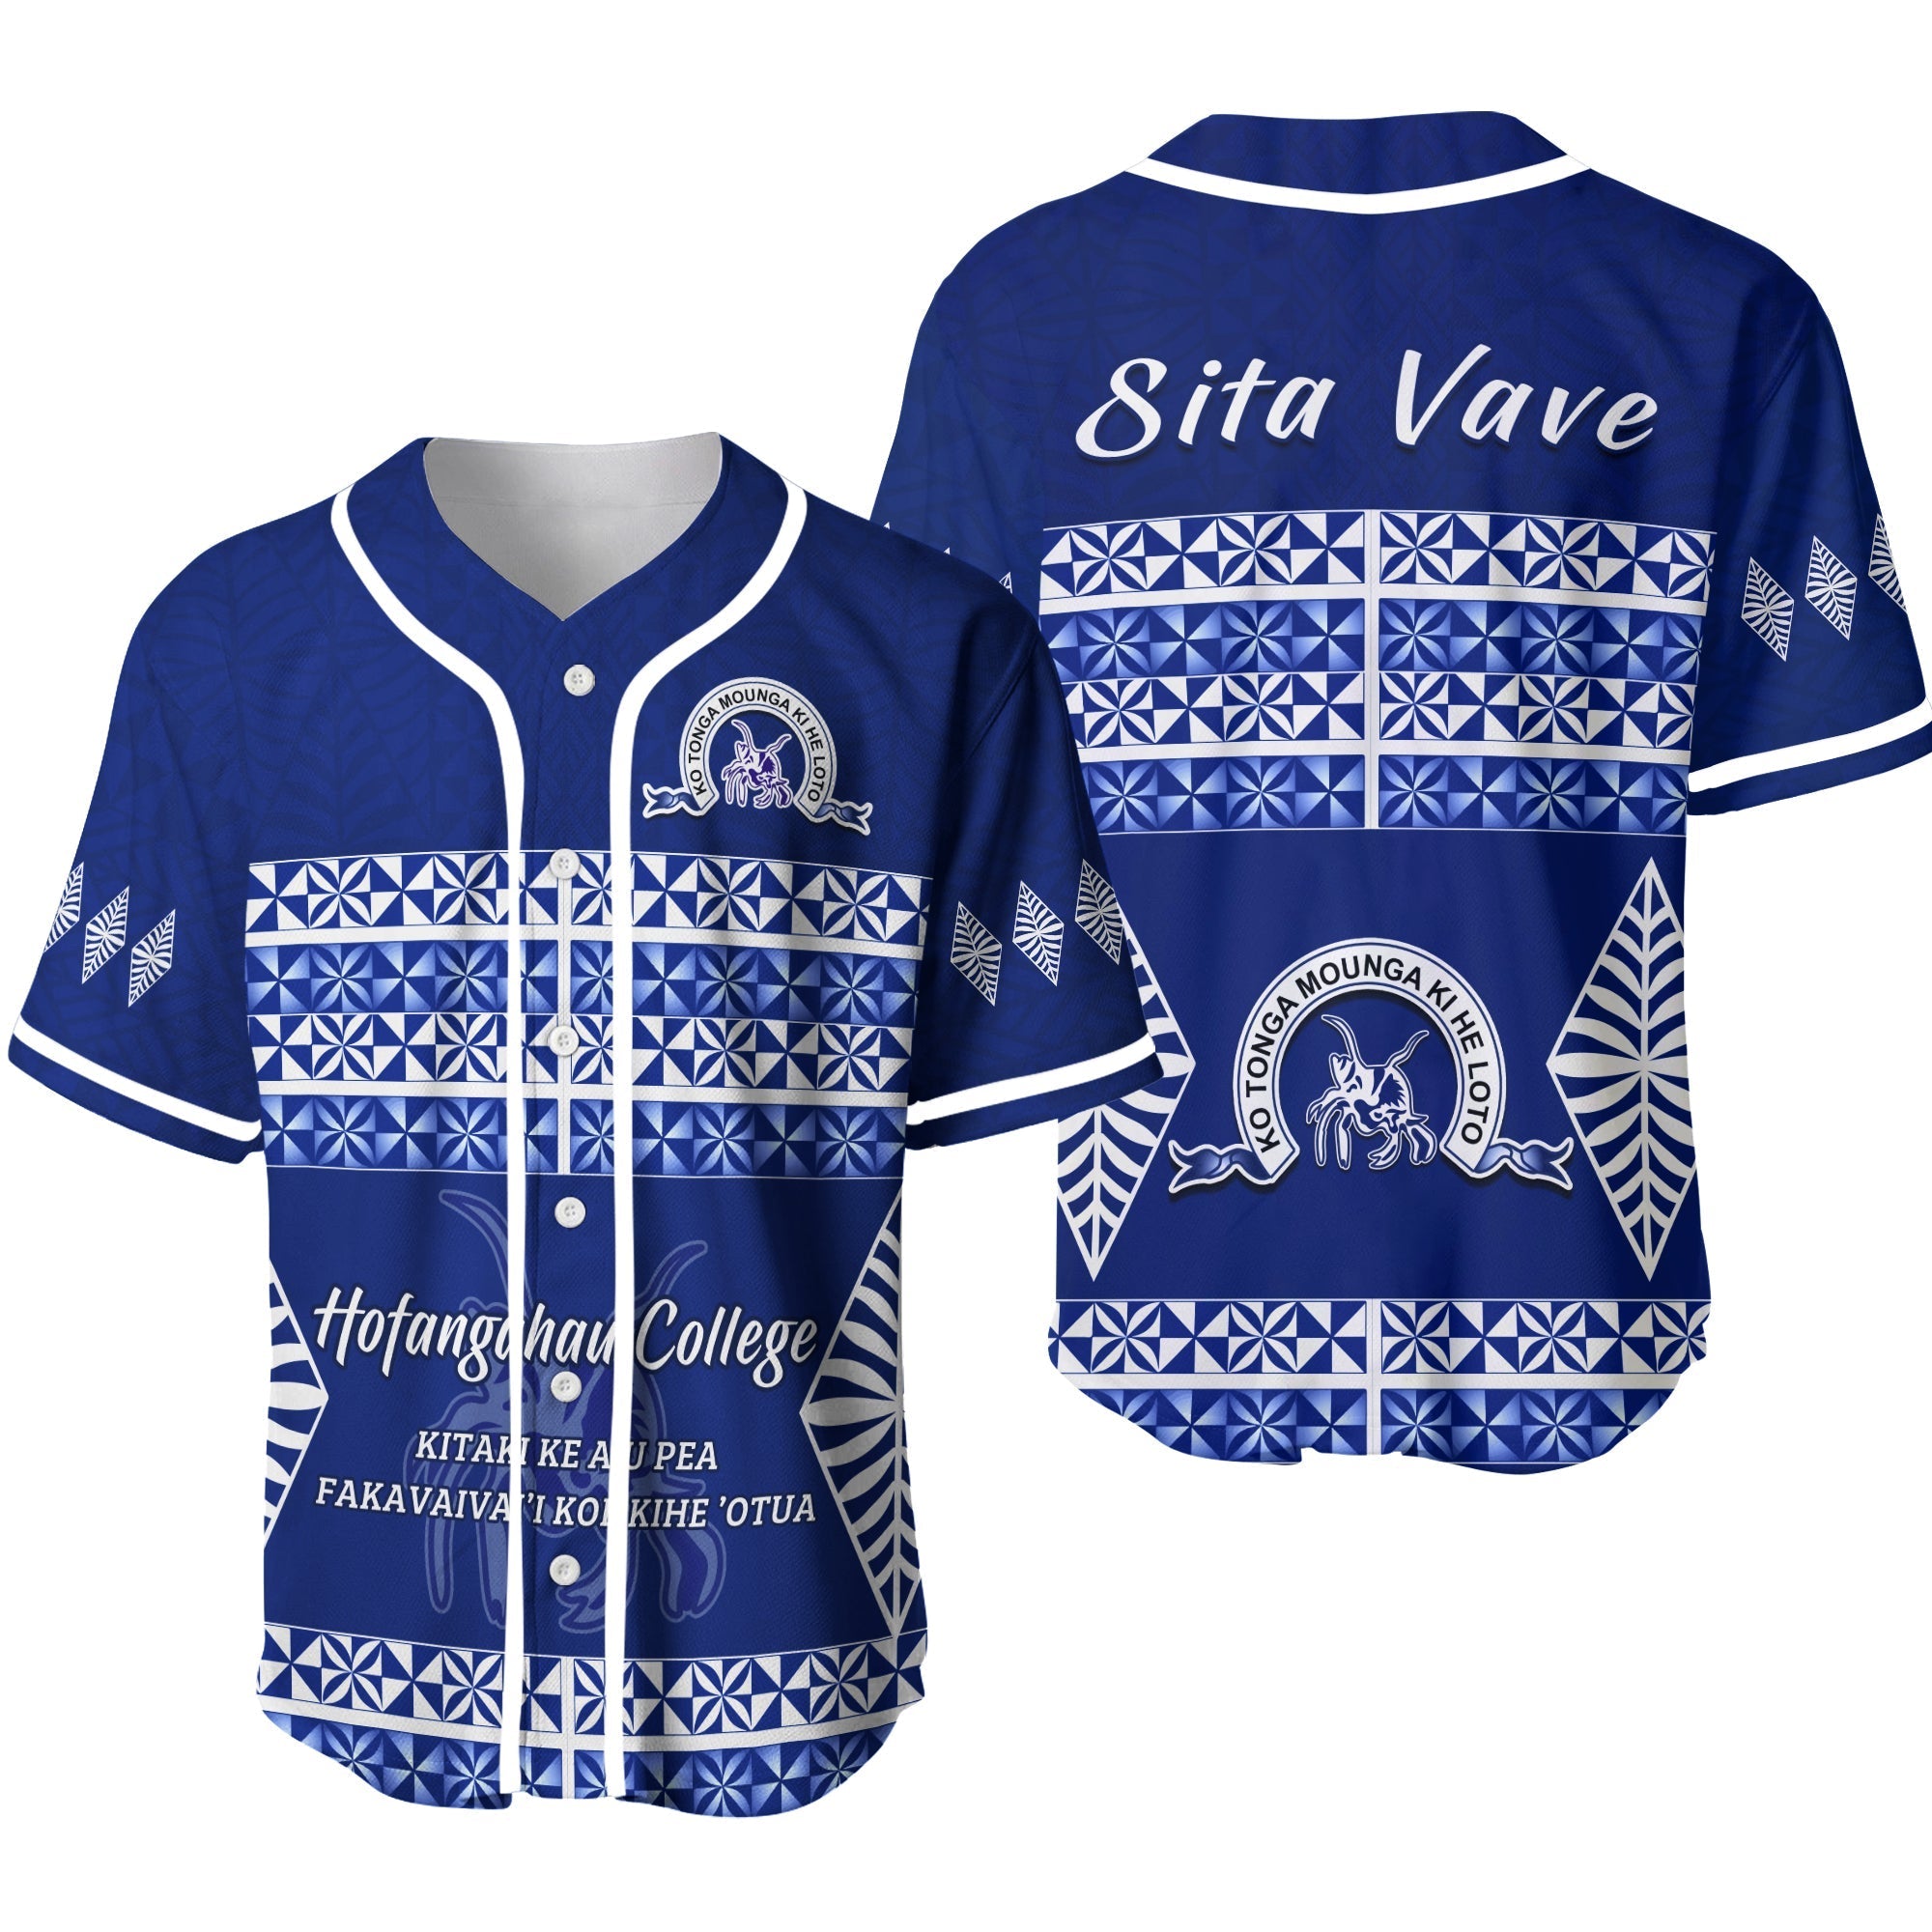 sita-vave-hofangahau-college-baseball-jersey